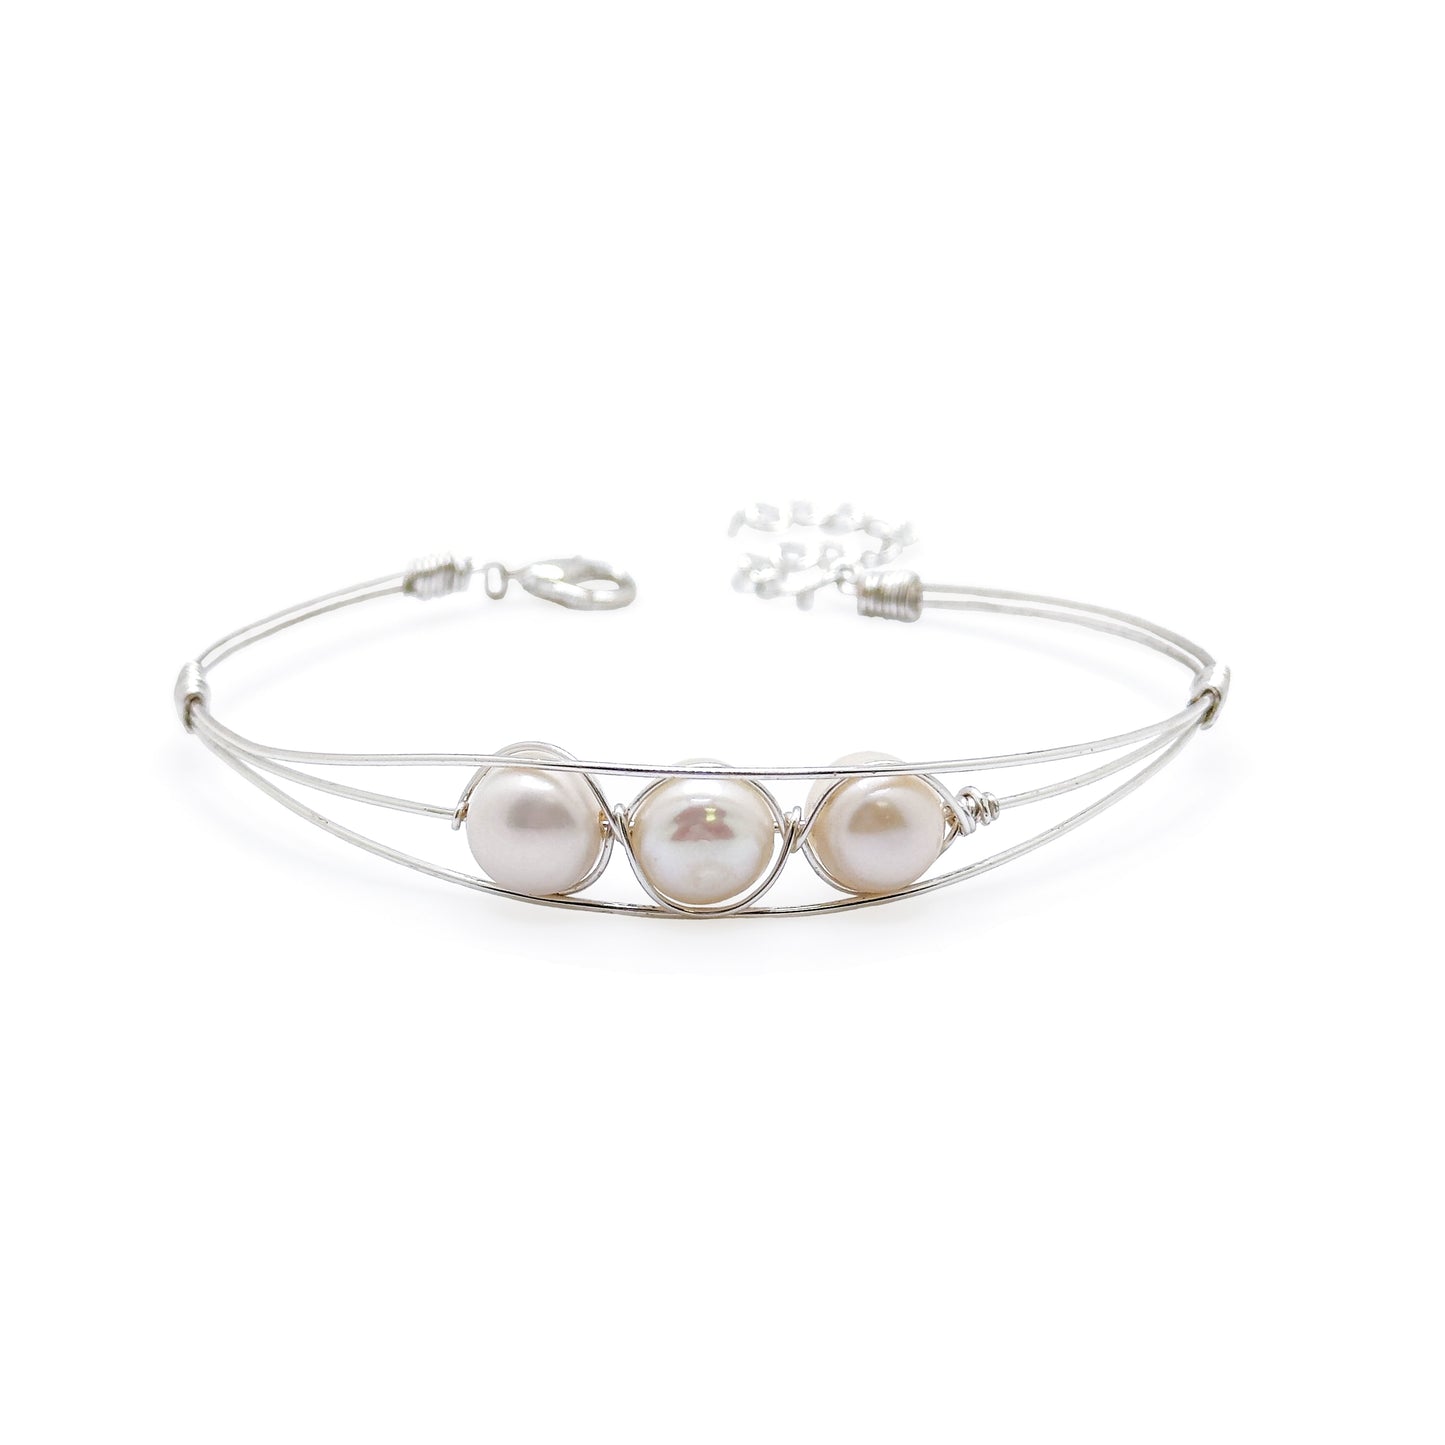 Perla silver bracelet